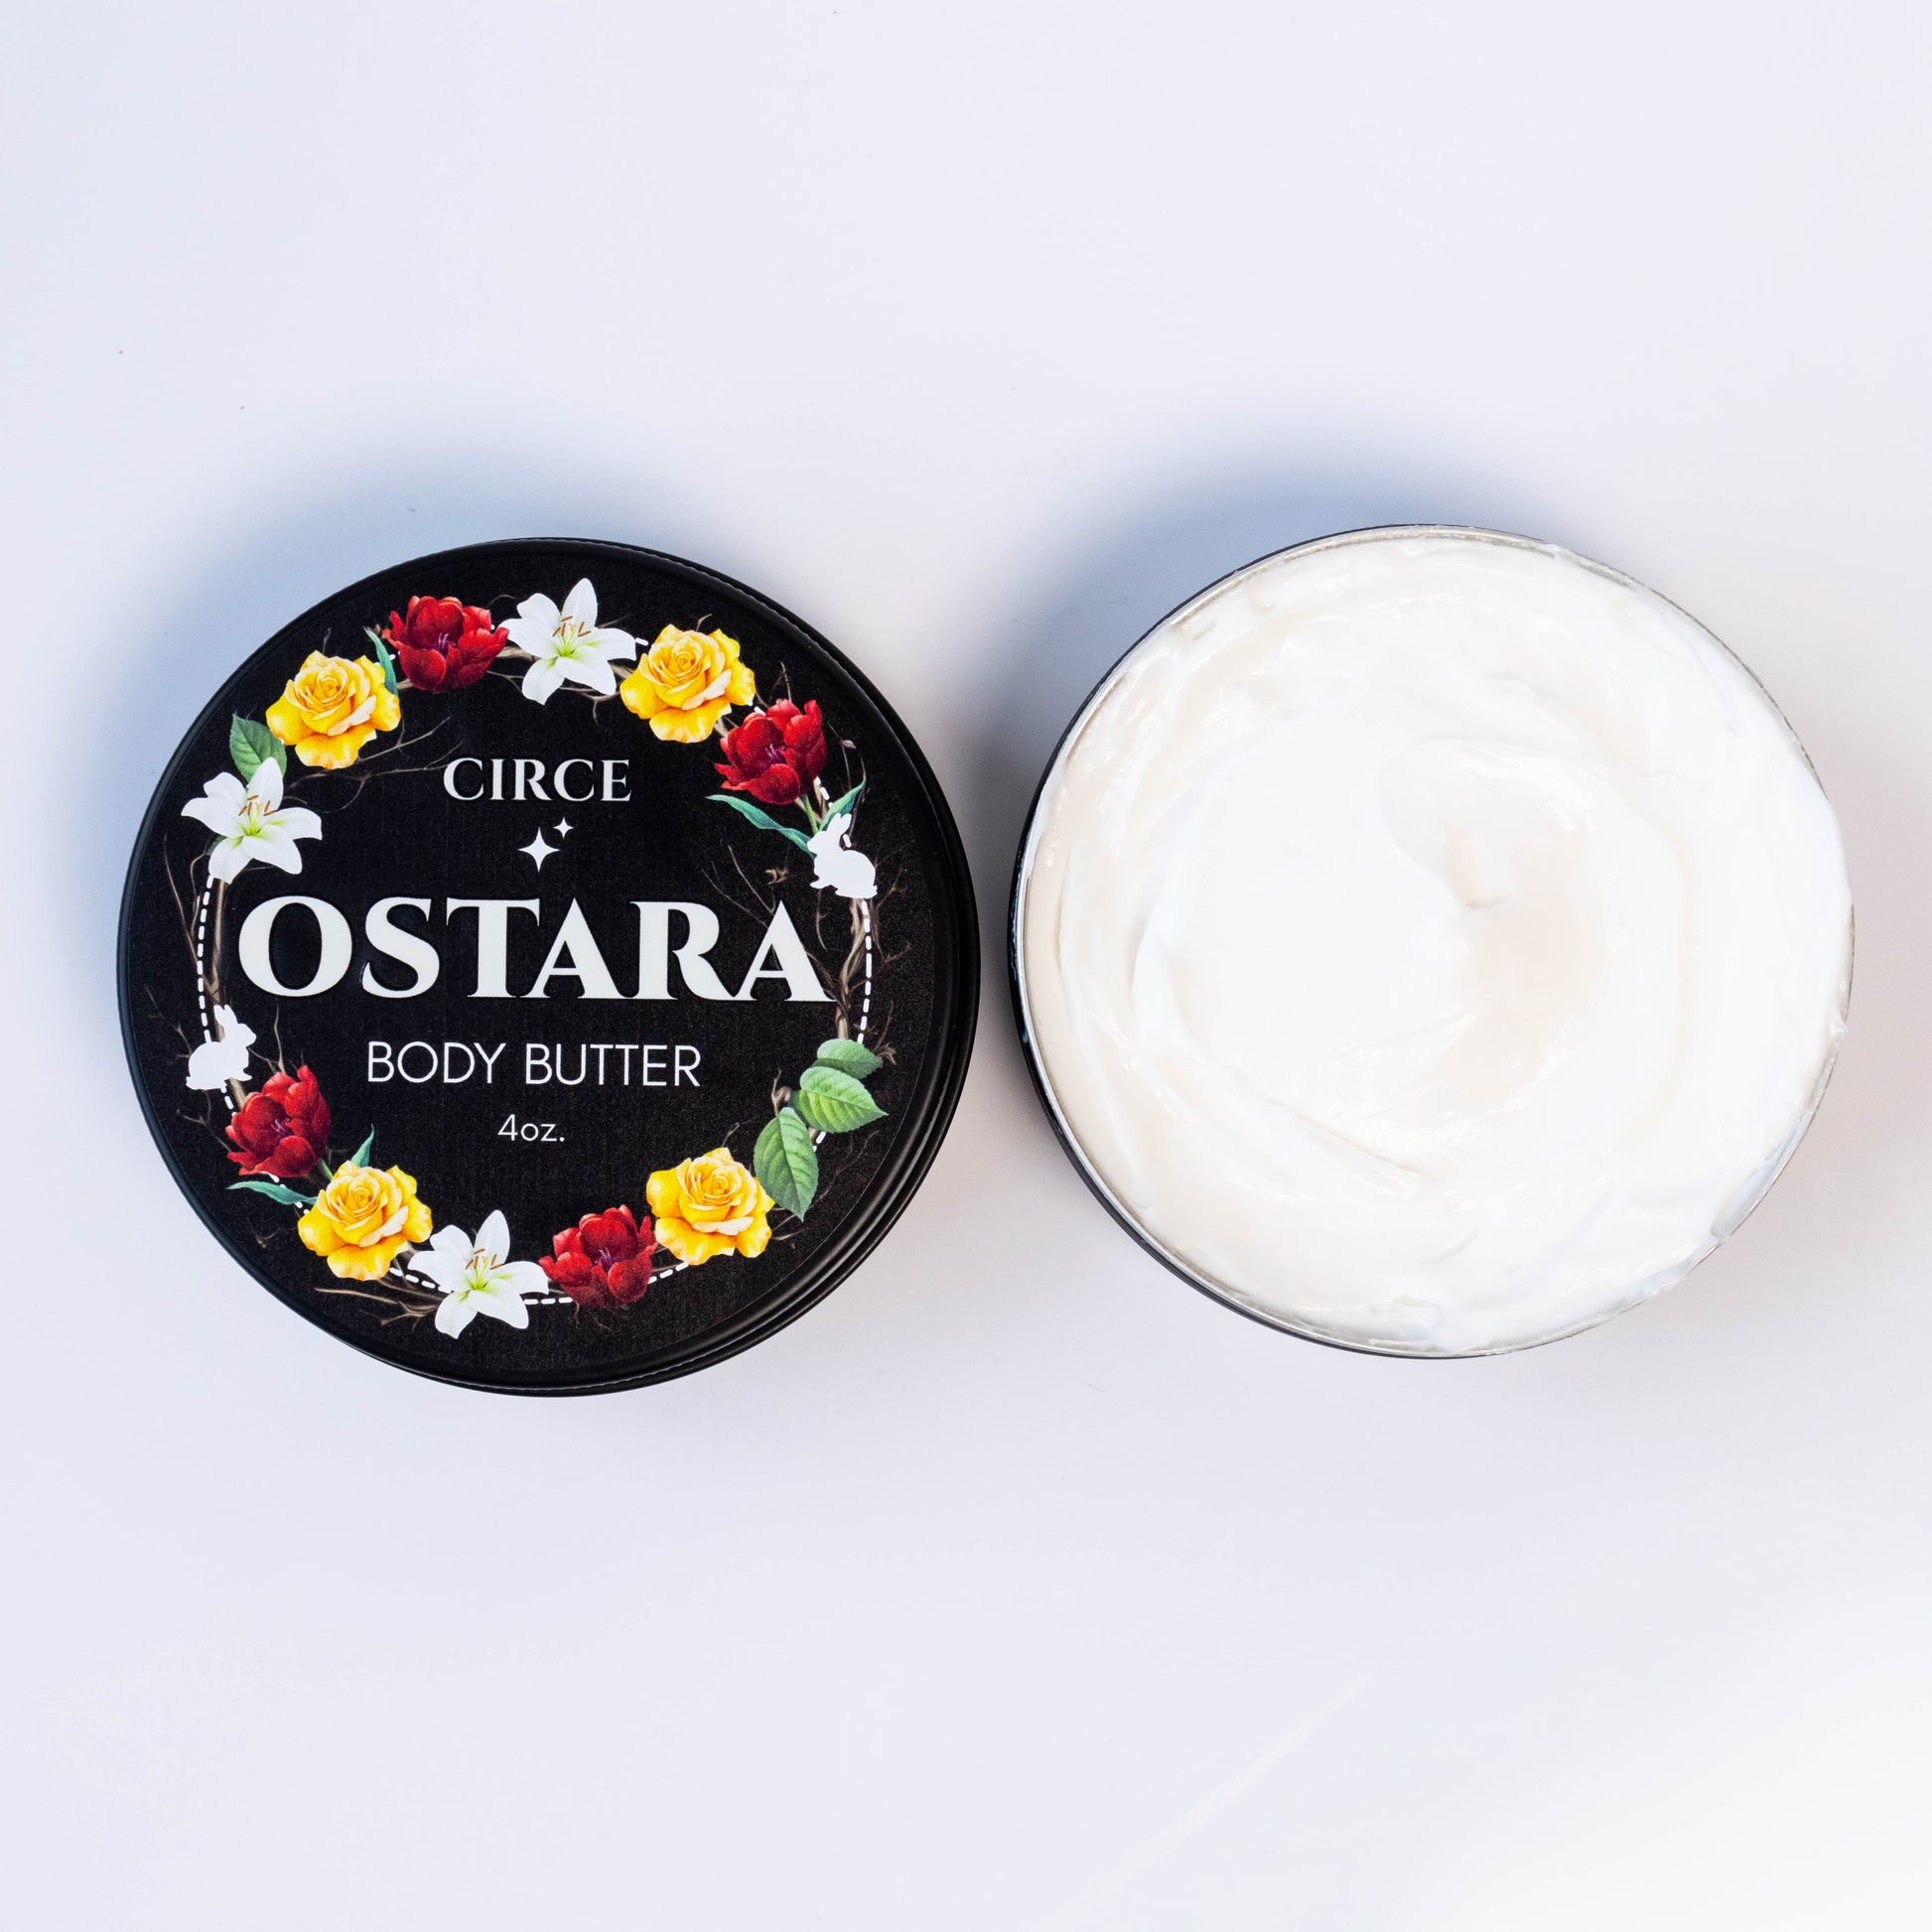 CIRCE Ostara Body Butter - FaWholesales  from Circe Boutique